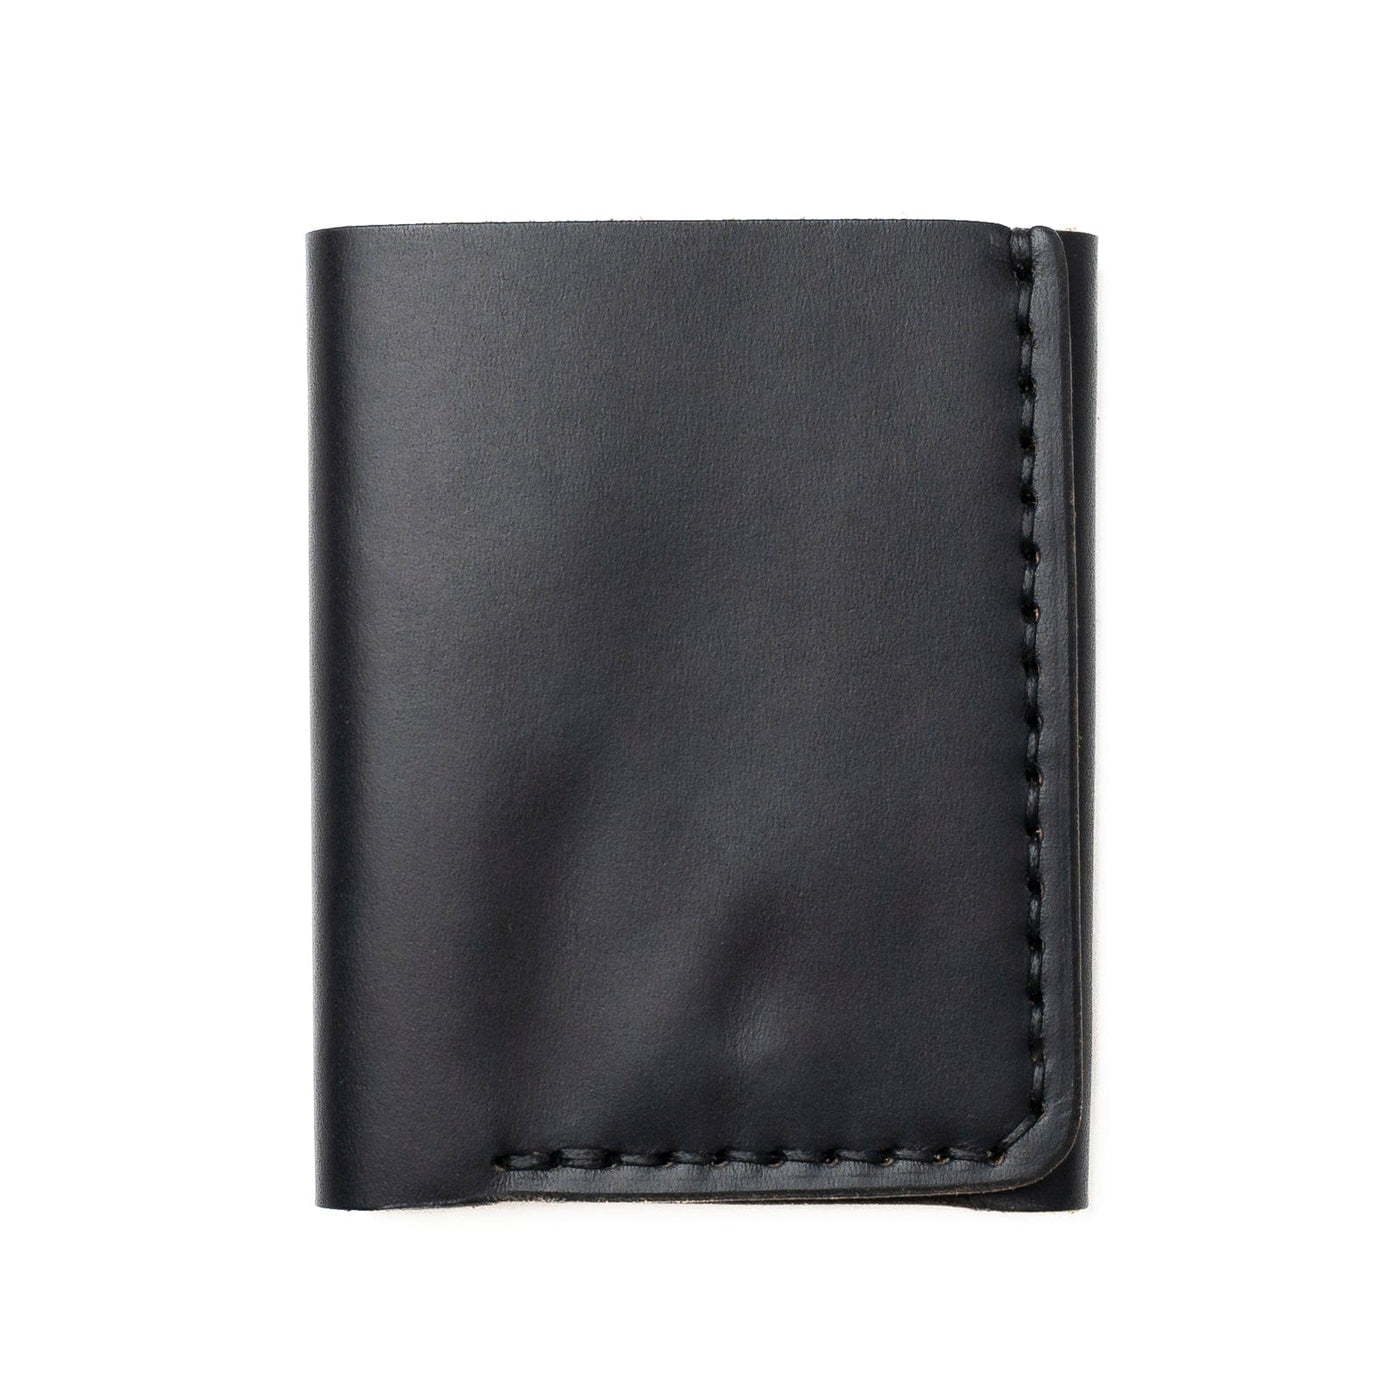 Black Leather Trifold Wallet: Compact, Elegant Design - Red - Popov ...